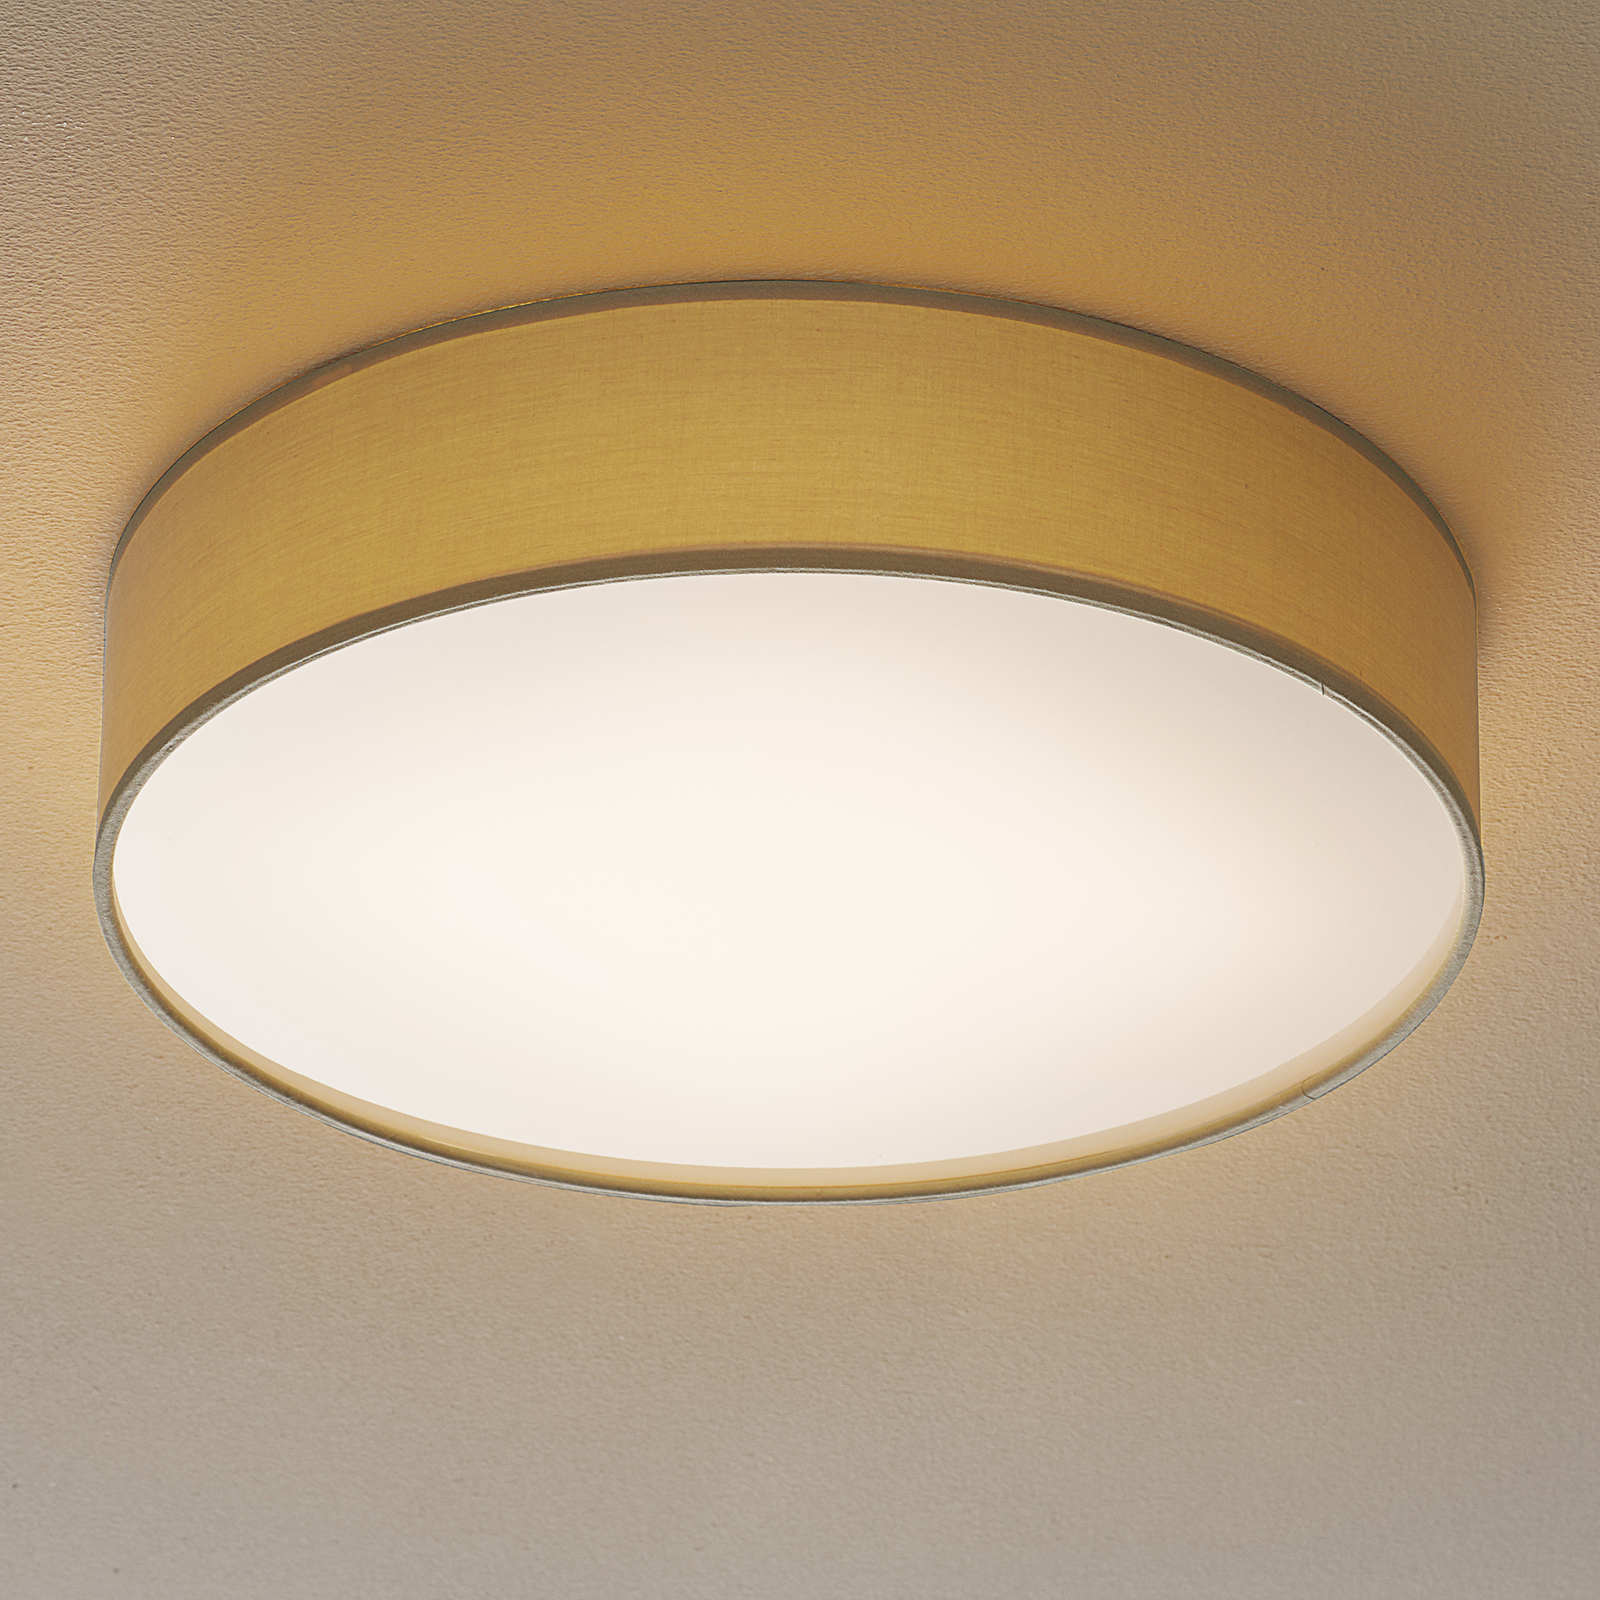 LEDS-C4 Bol LED ceiling light, fabric lampshade